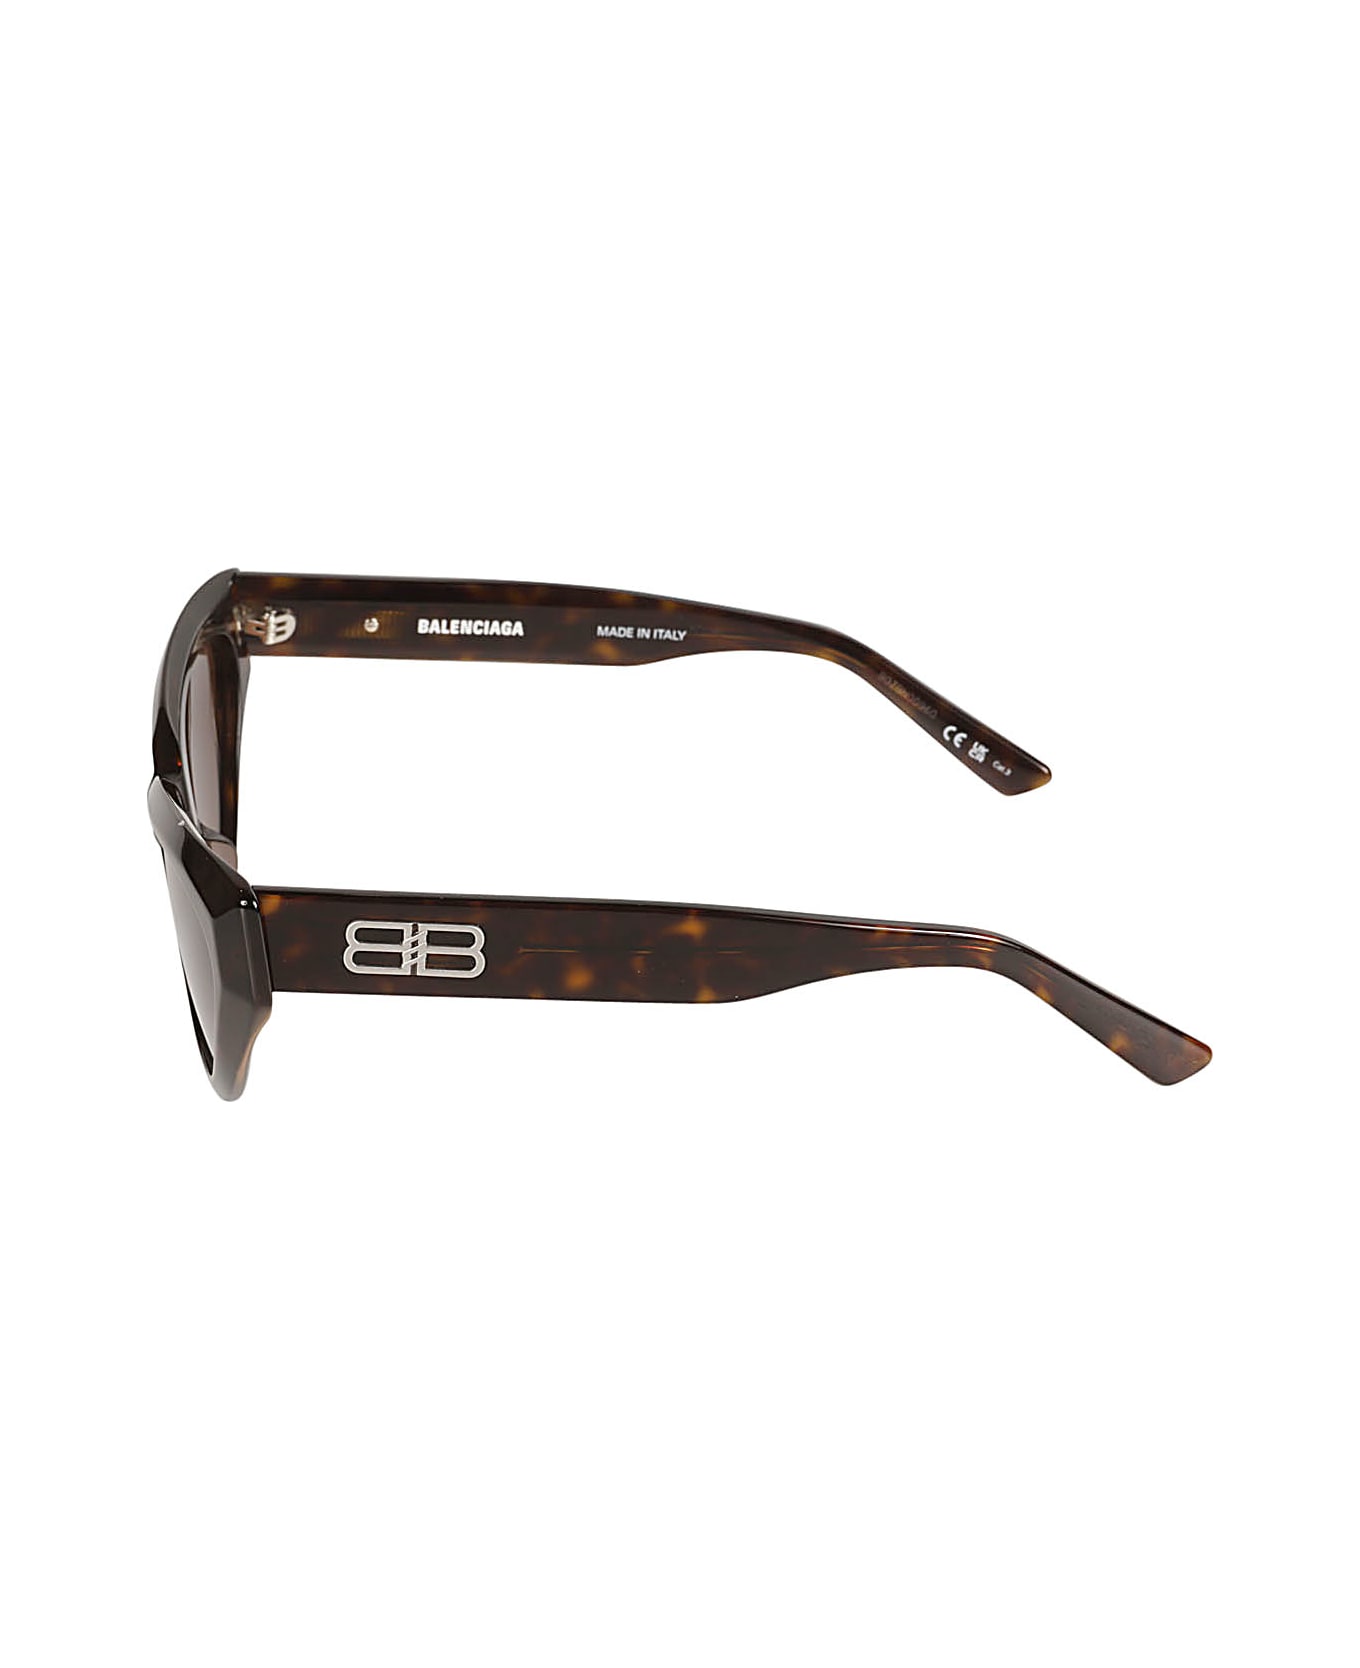 Balenciaga Eyewear Bb Plaque Cat Eye Frame Sunglasses - Havana/Brown サングラス